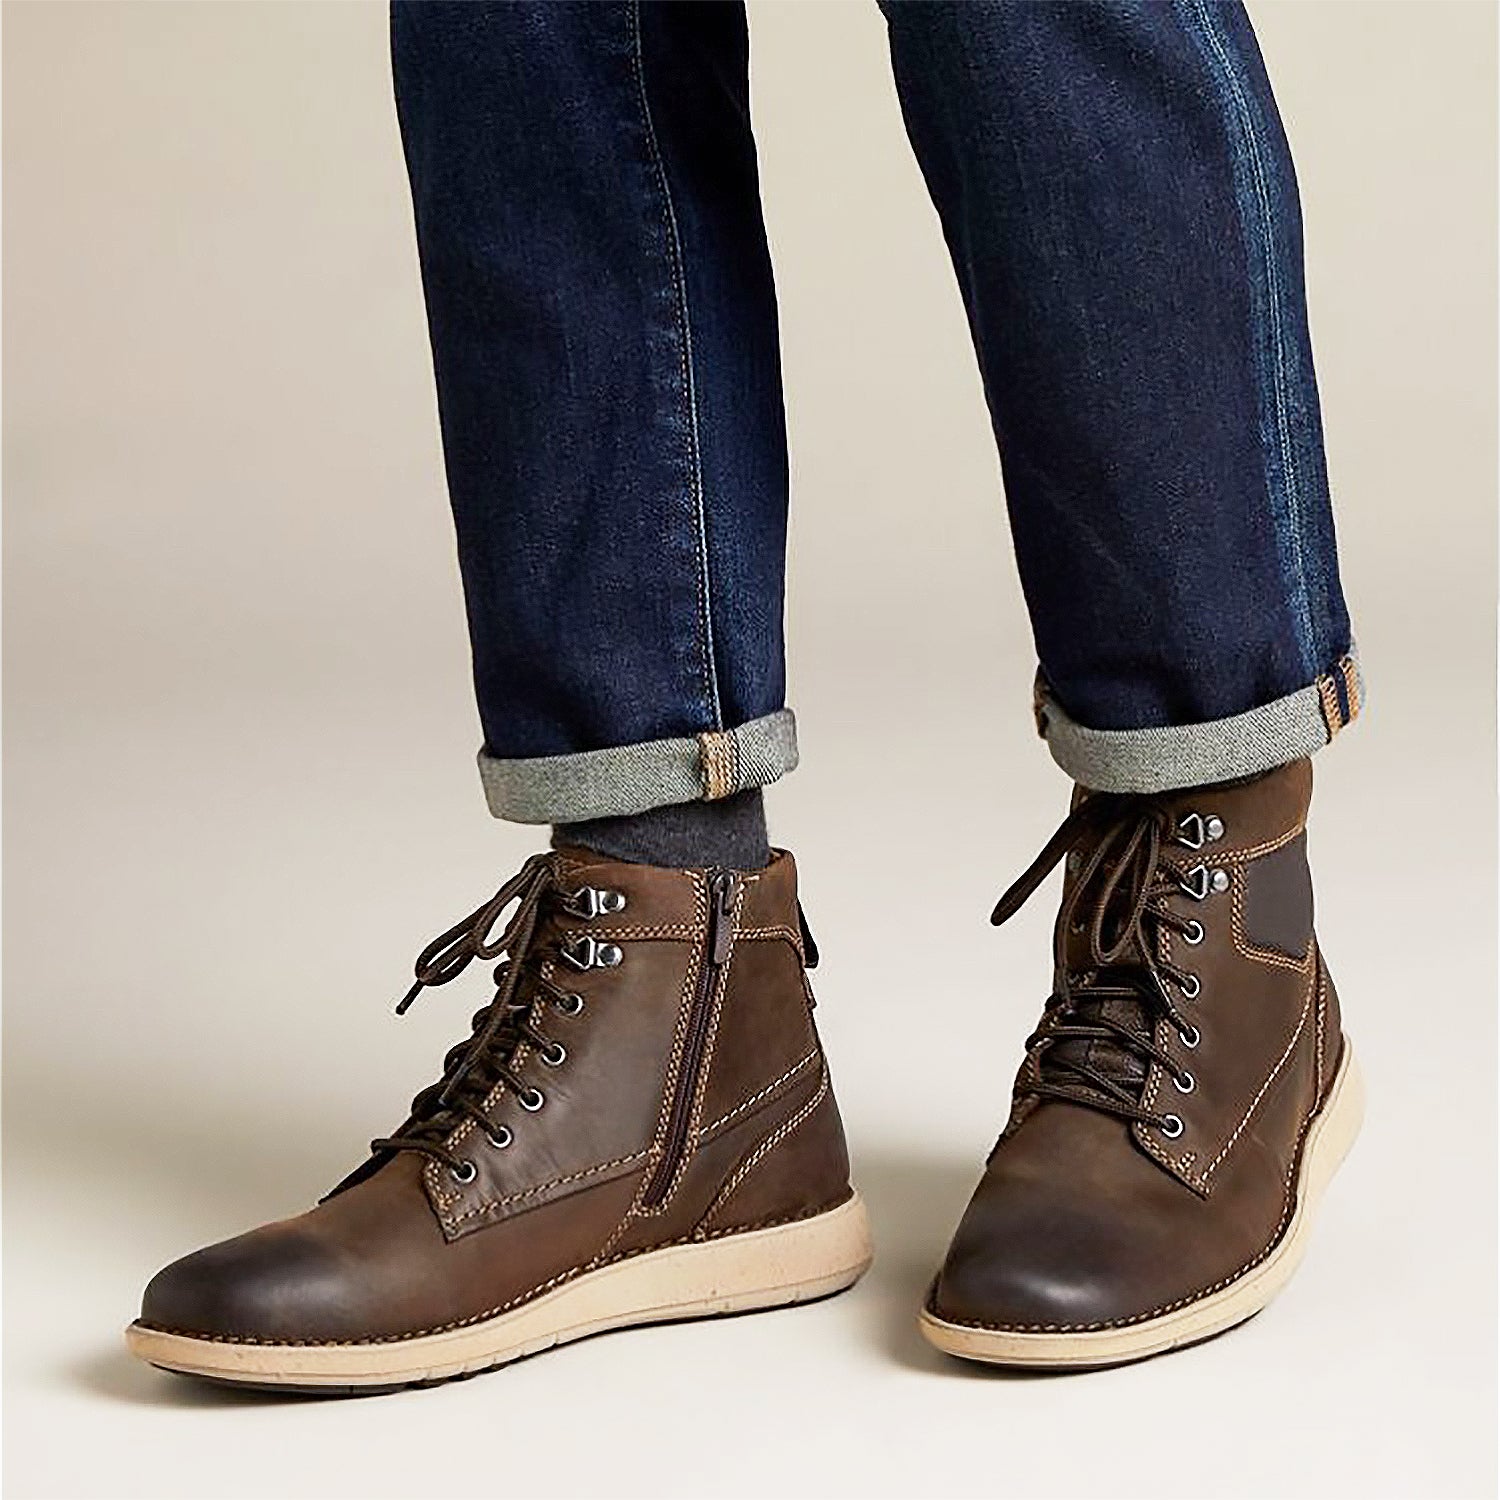 Men's Clarks Un Larvik Peak Brown Leather – Footwear etc.